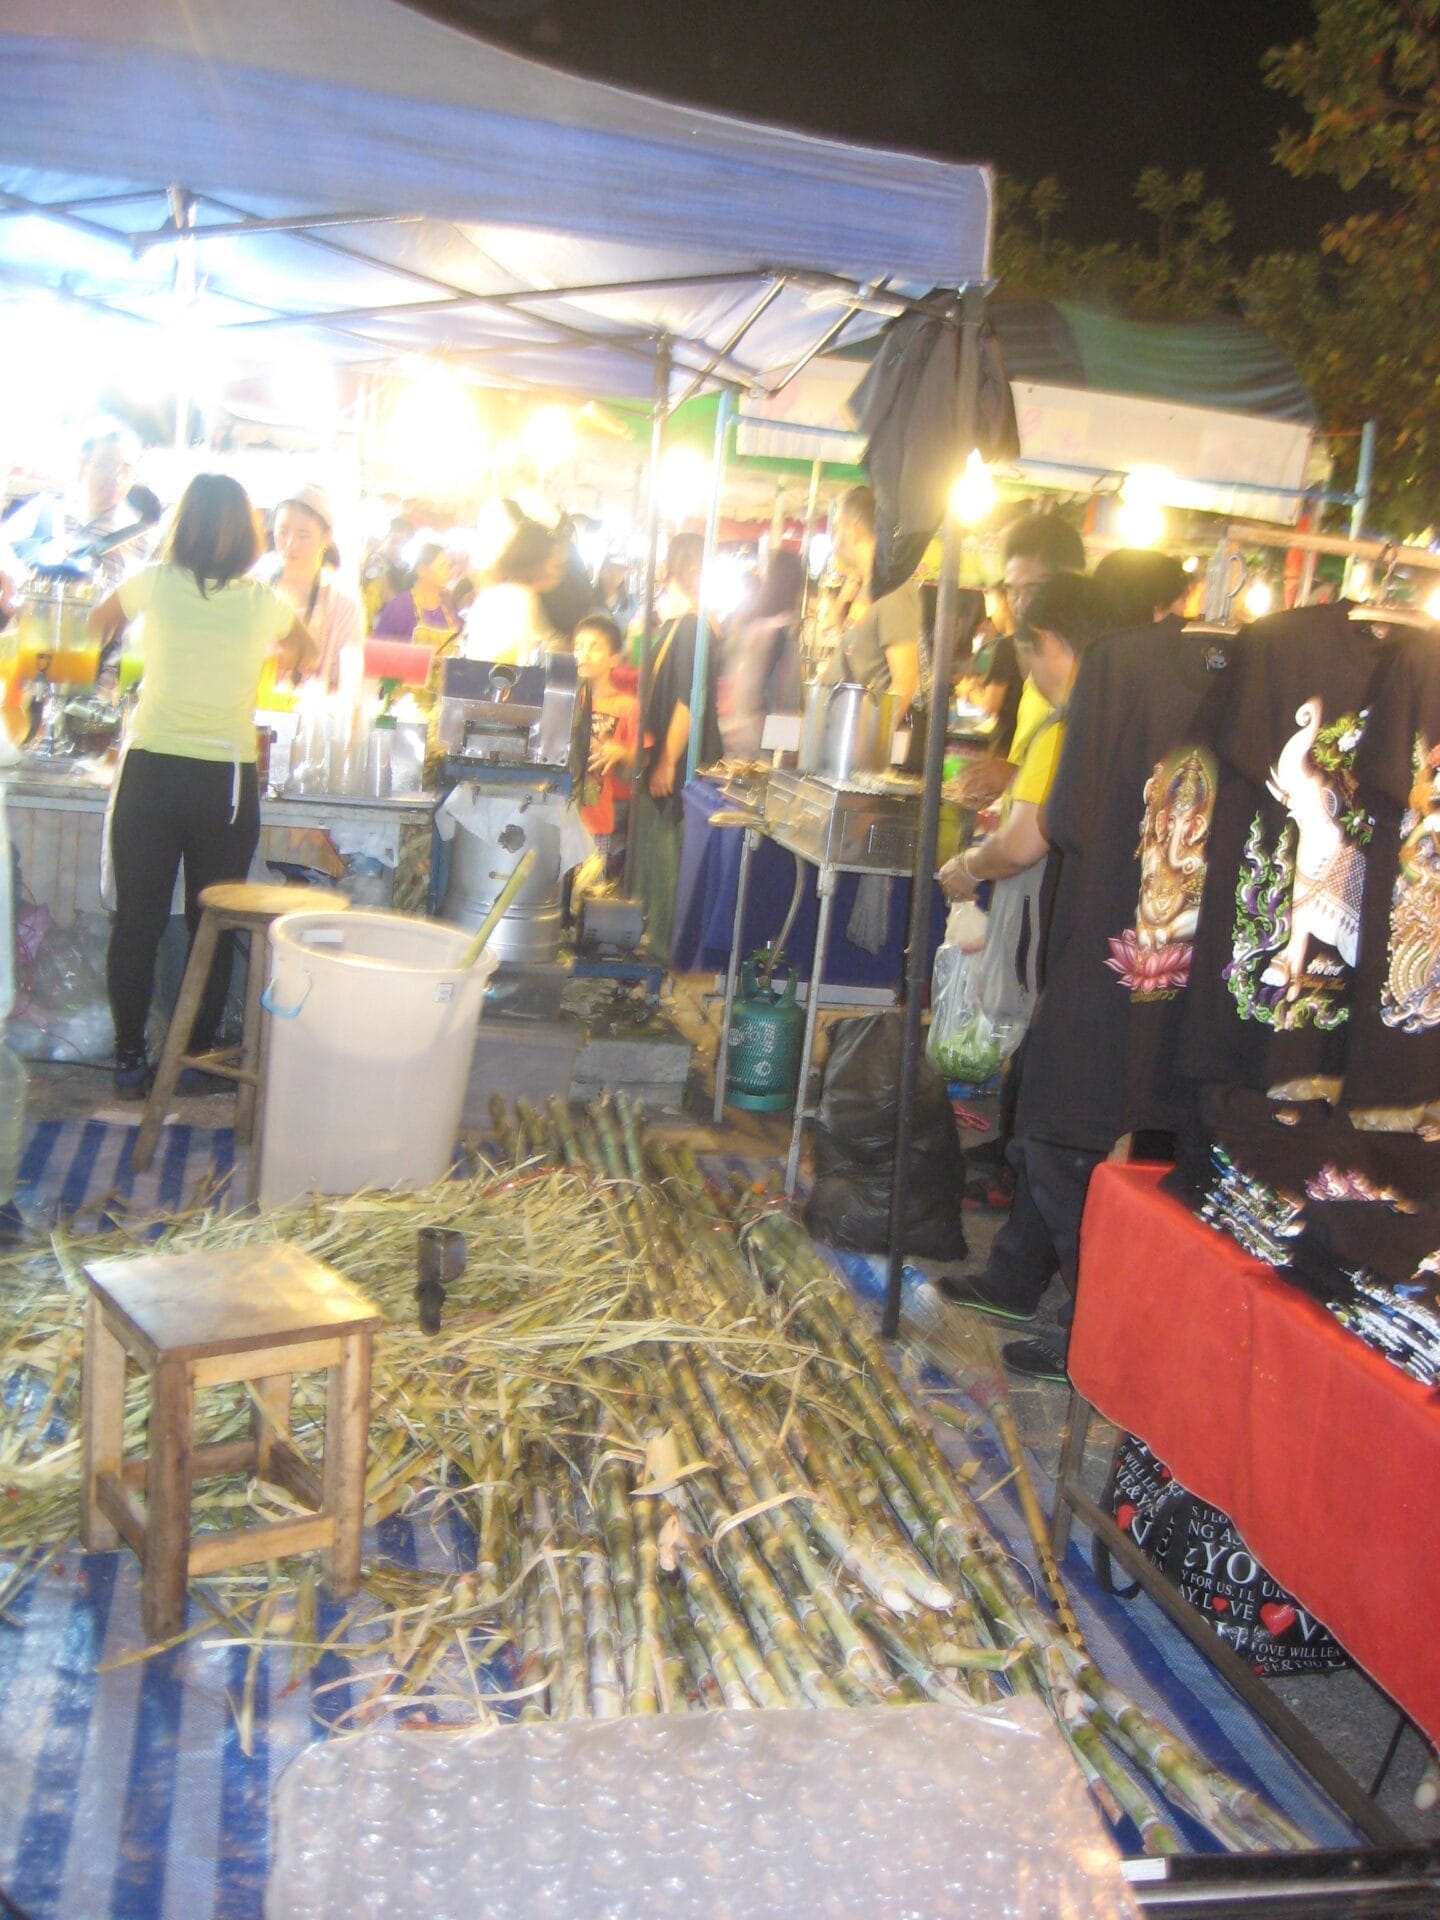 Sunday Market Chiang Mai, Thailand: sugar cane being juiced